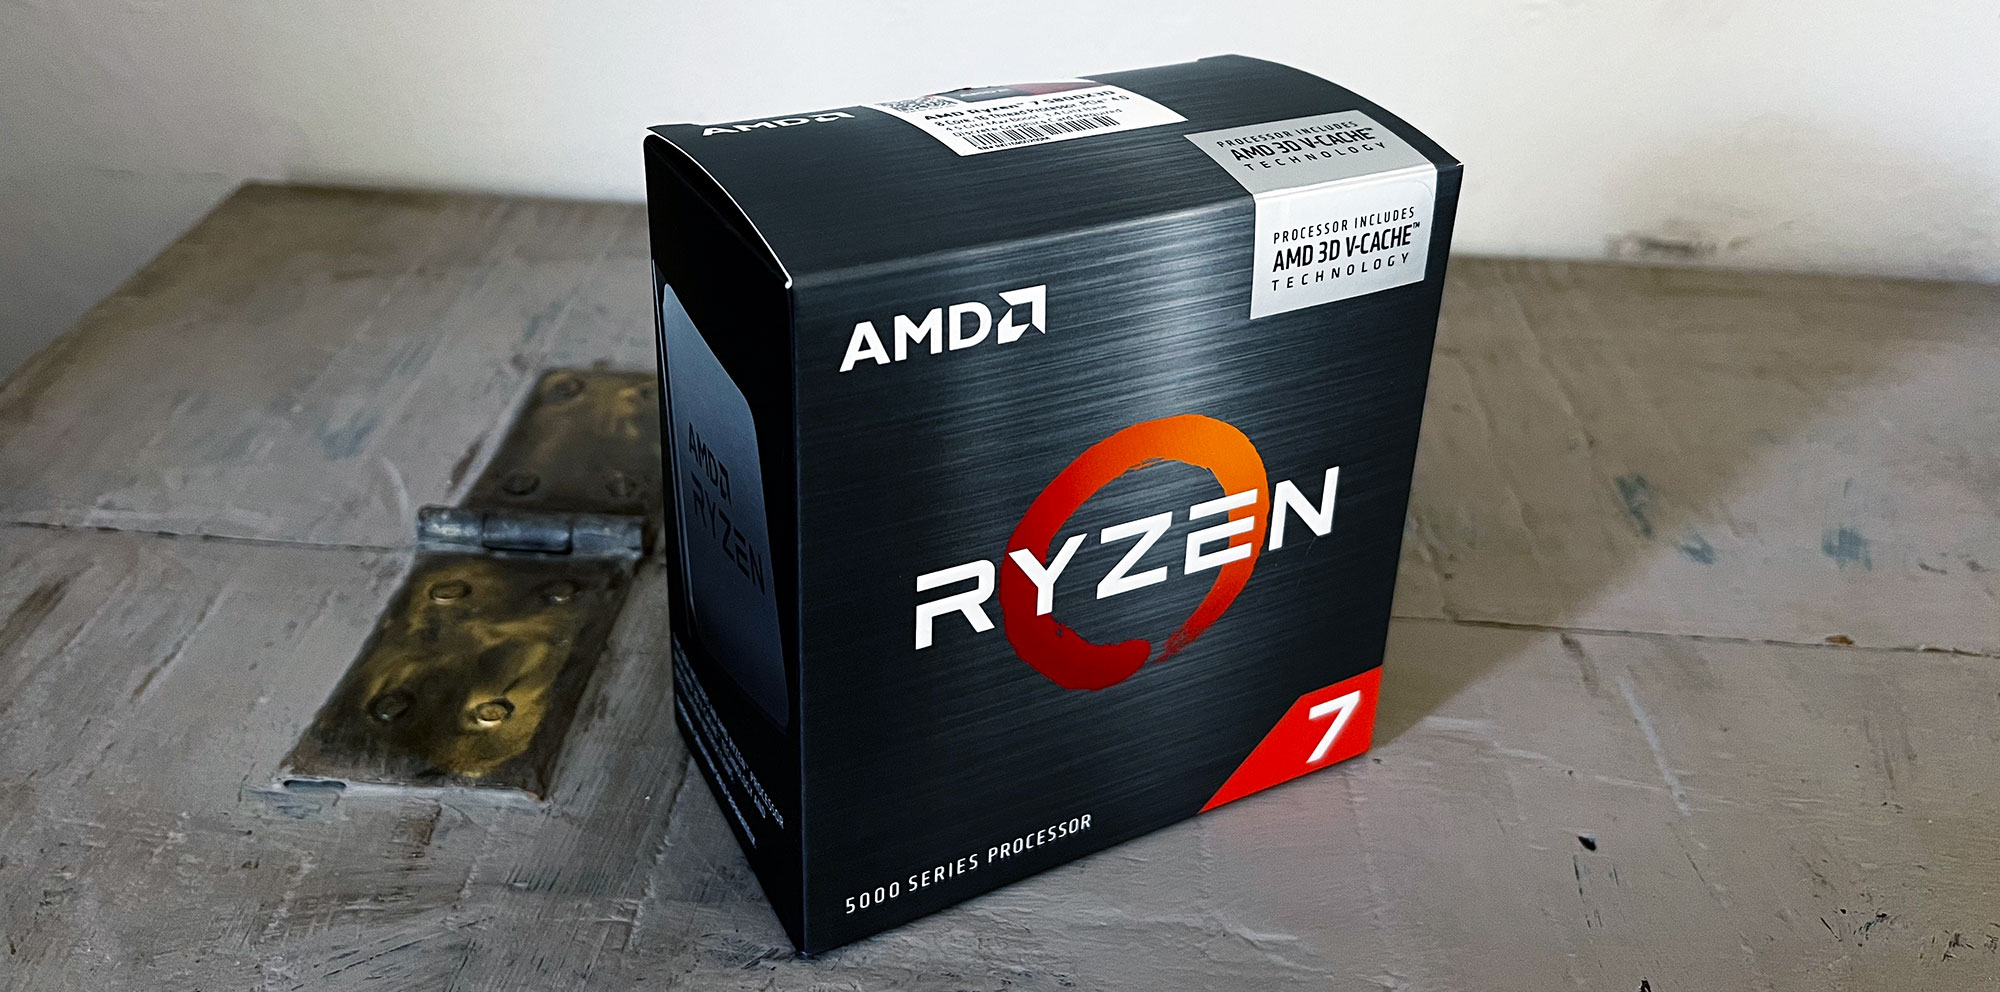 AMD Ryzen 7 5800X3D vs AMD Ryzen 7 5800X: A Cache Value? - Page 5 of 10